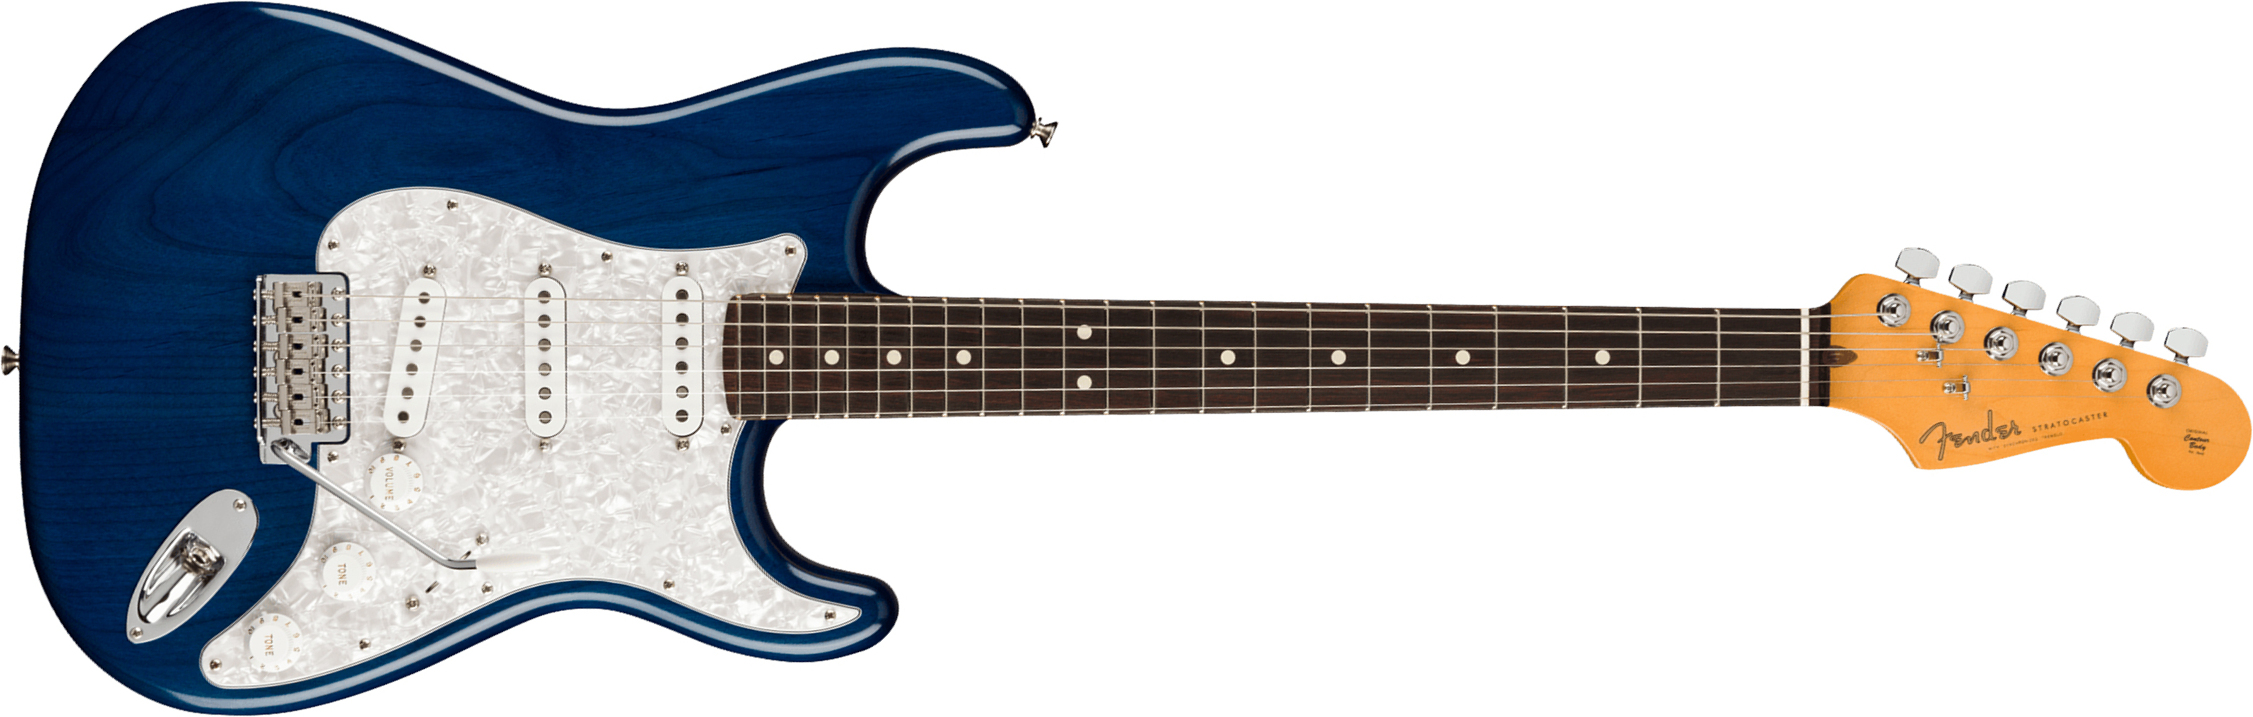 Fender Cory Wong Strat Signature Usa 3s Trem Rw - Sapphire Blue Transparent - E-Gitarre in Str-Form - Main picture